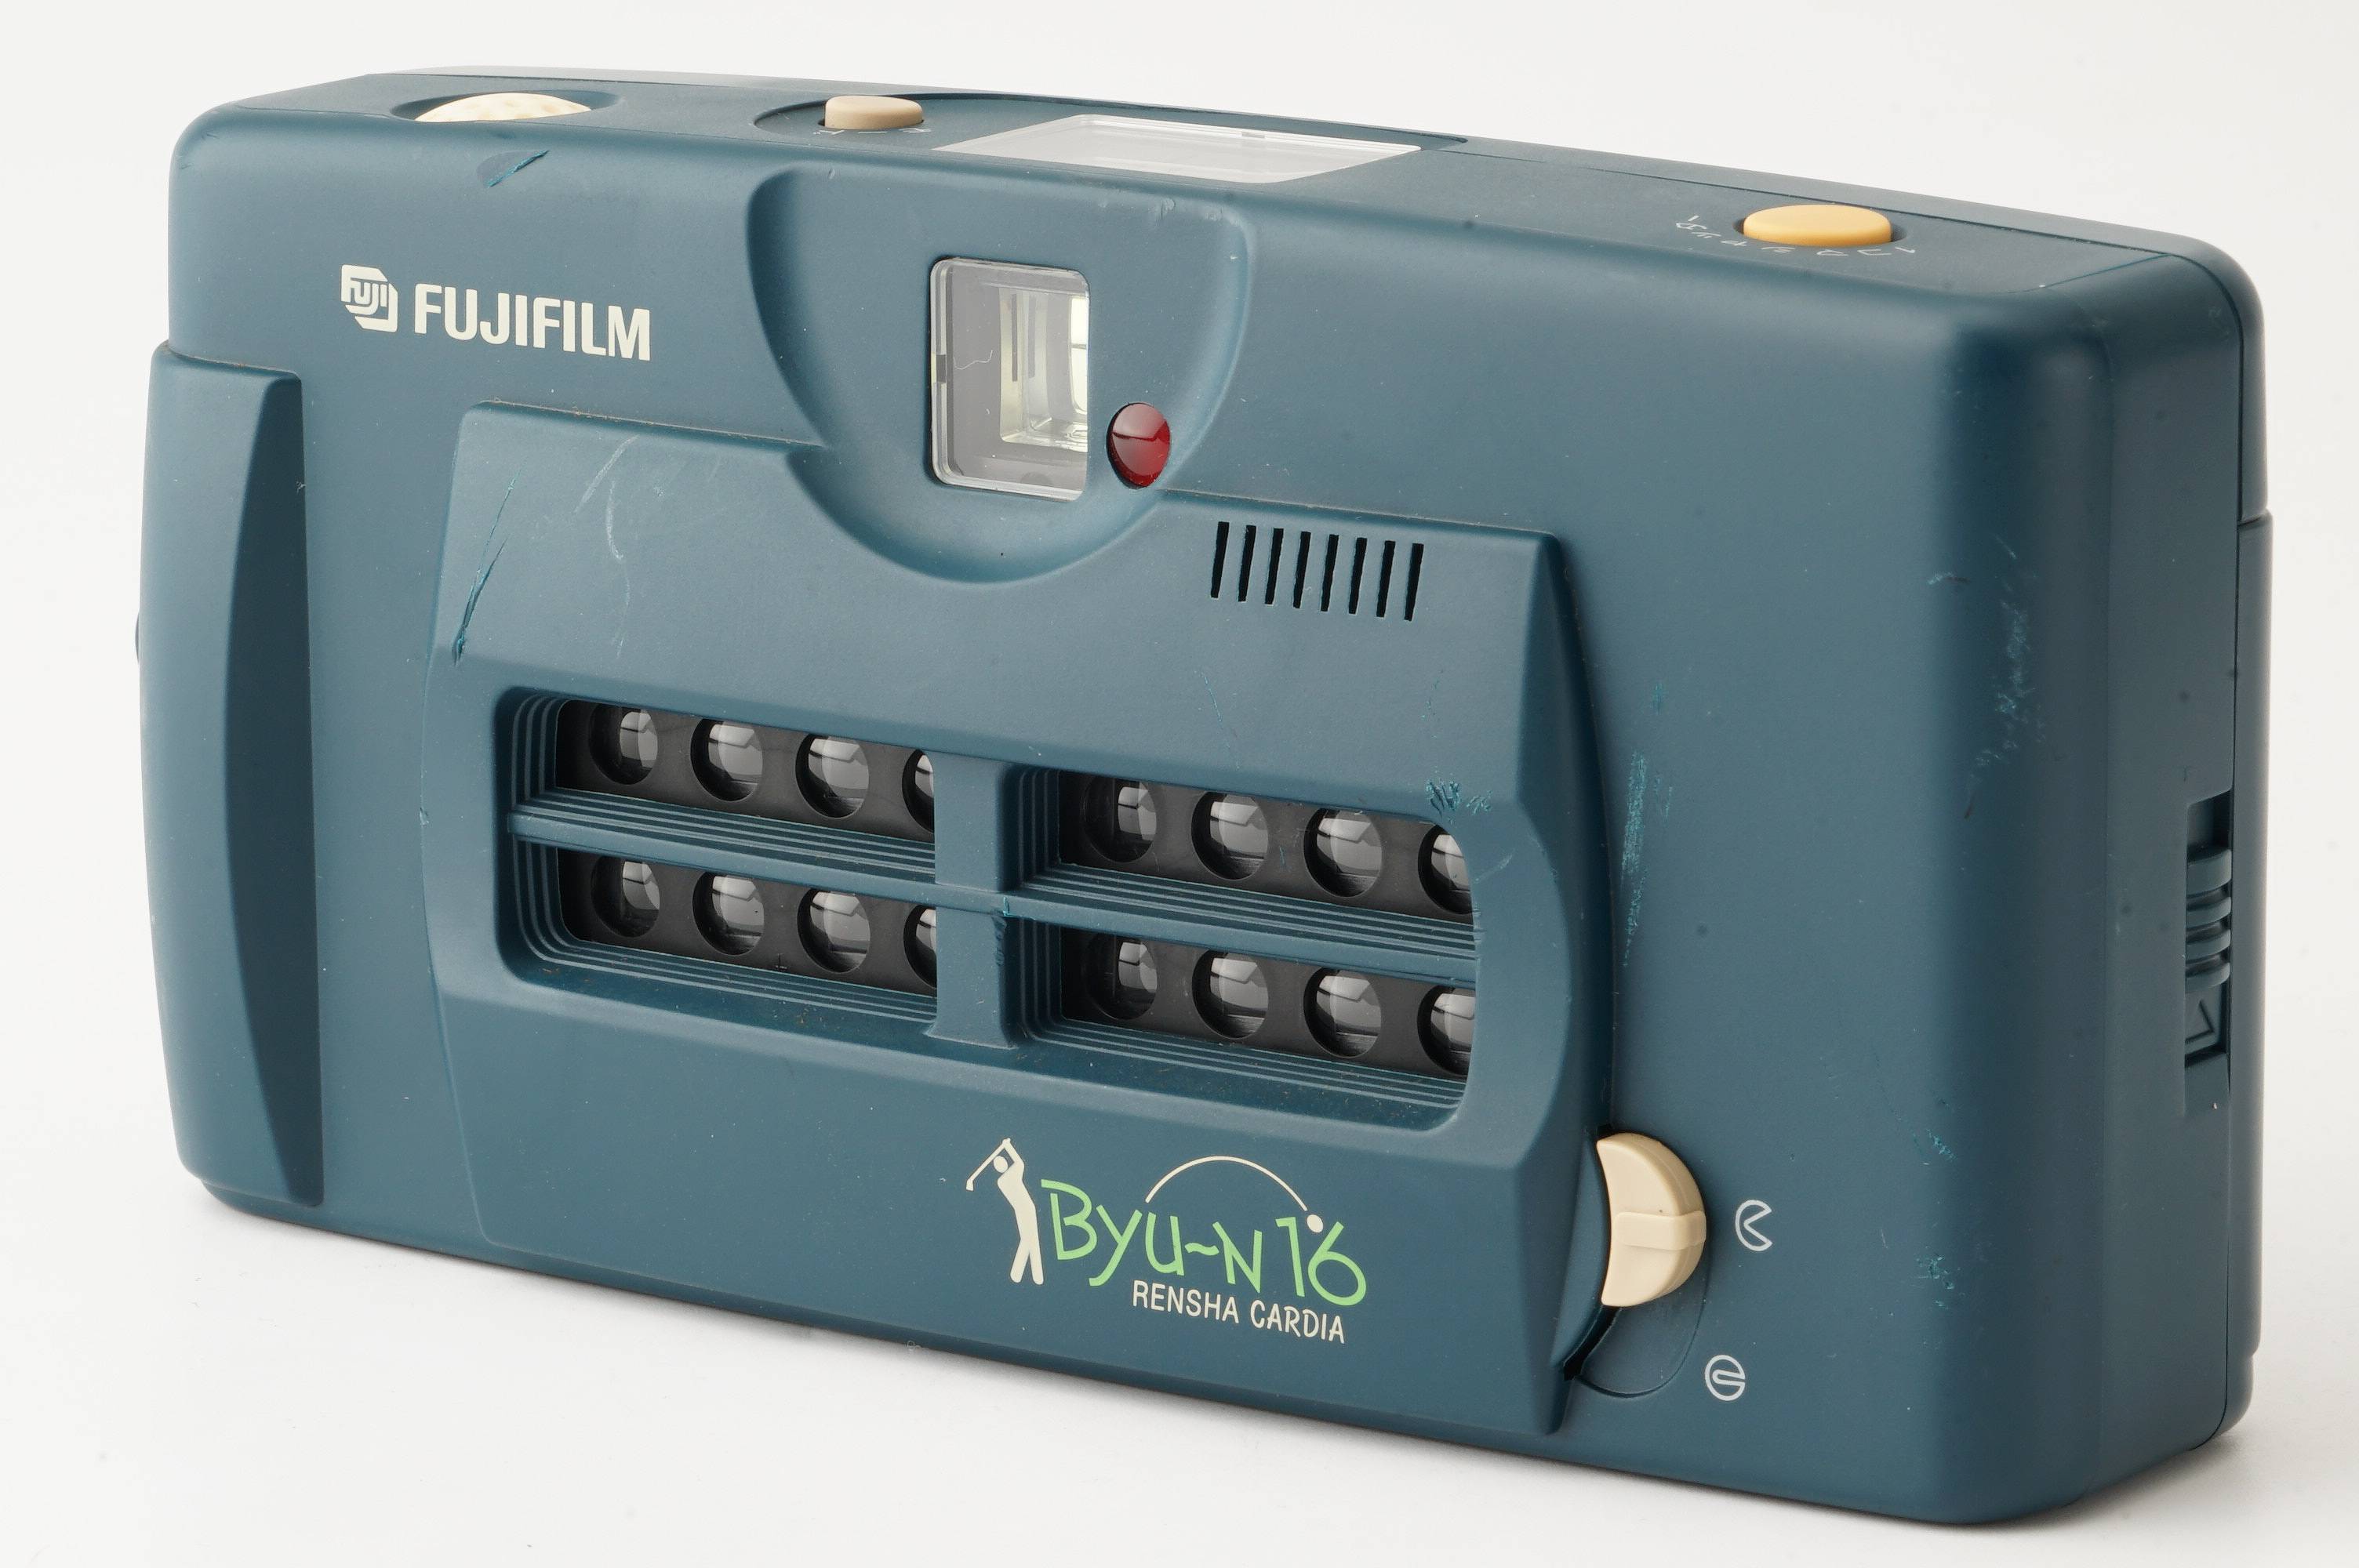 FUJIFILM Byu-n16 富士フィルム製カメラ ゴルフ♪ 動作OK発送方法の選択は不可となります